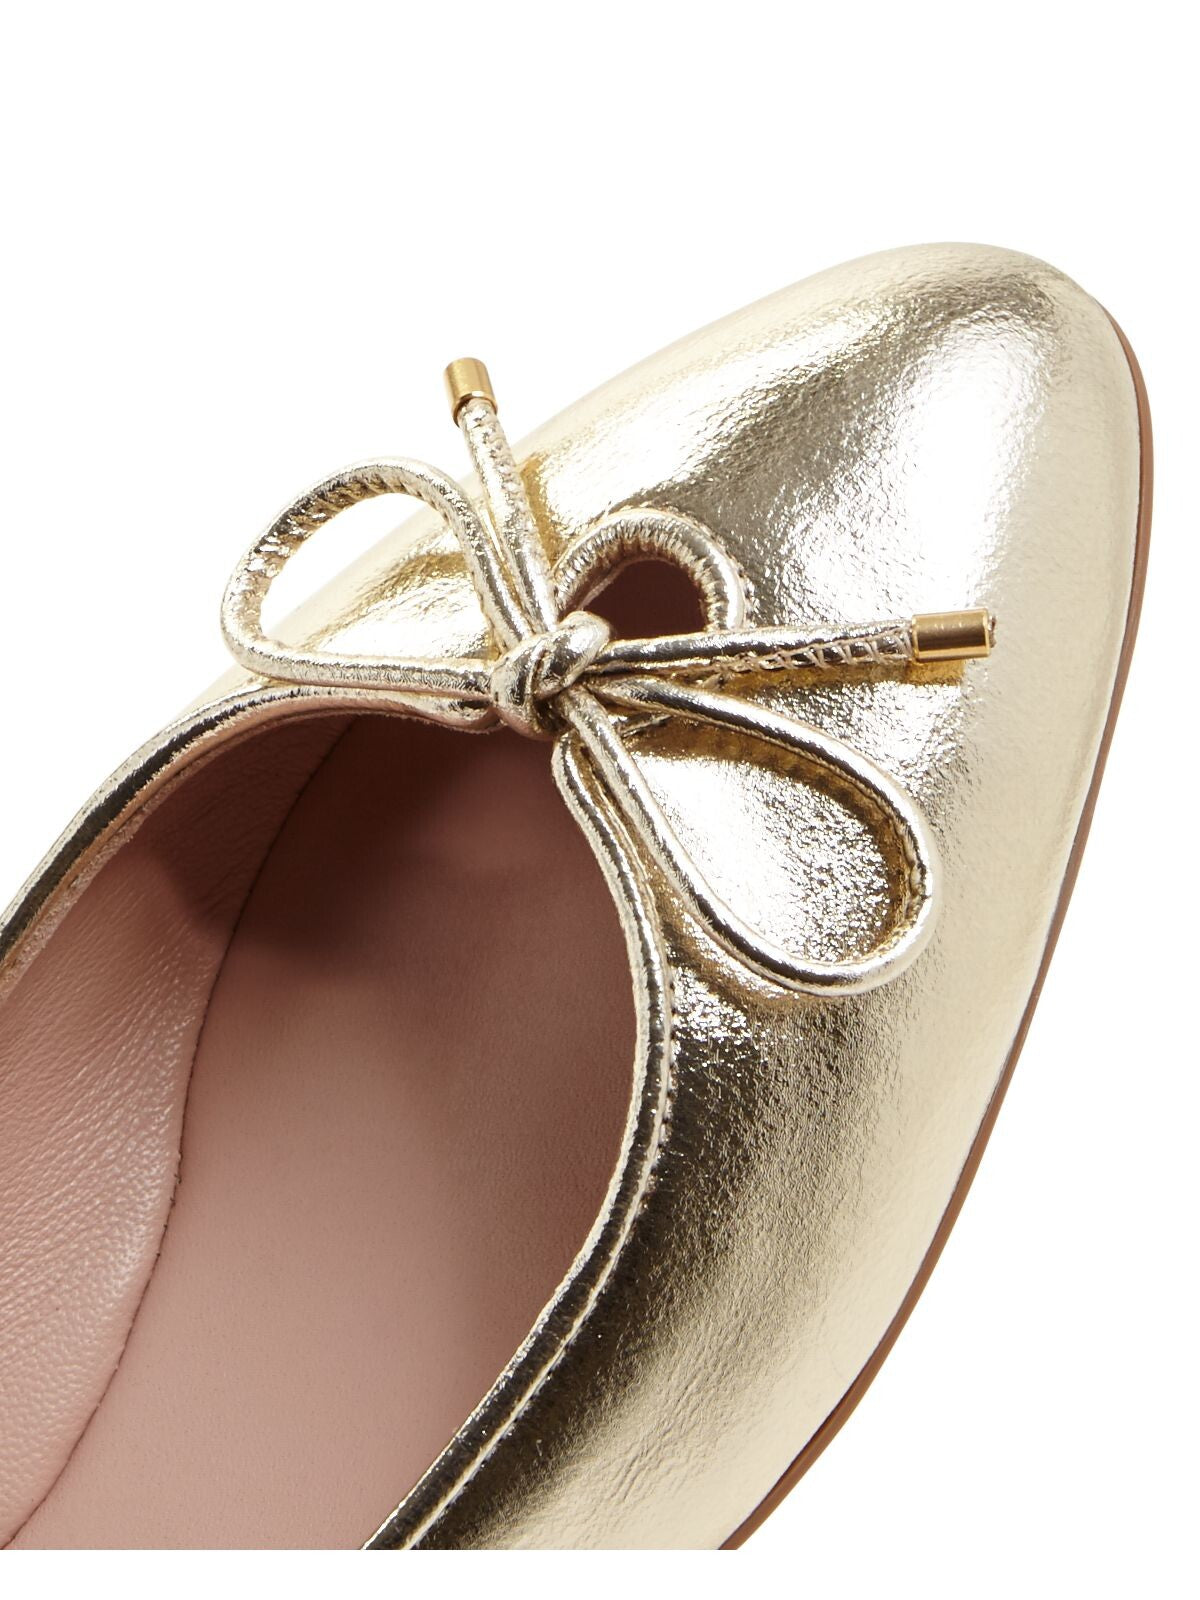 STUART WEITZMAN Womens Gold Metallic Bow Accent Gabby Almond Toe Slip On Leather Dress Ballet Flats M